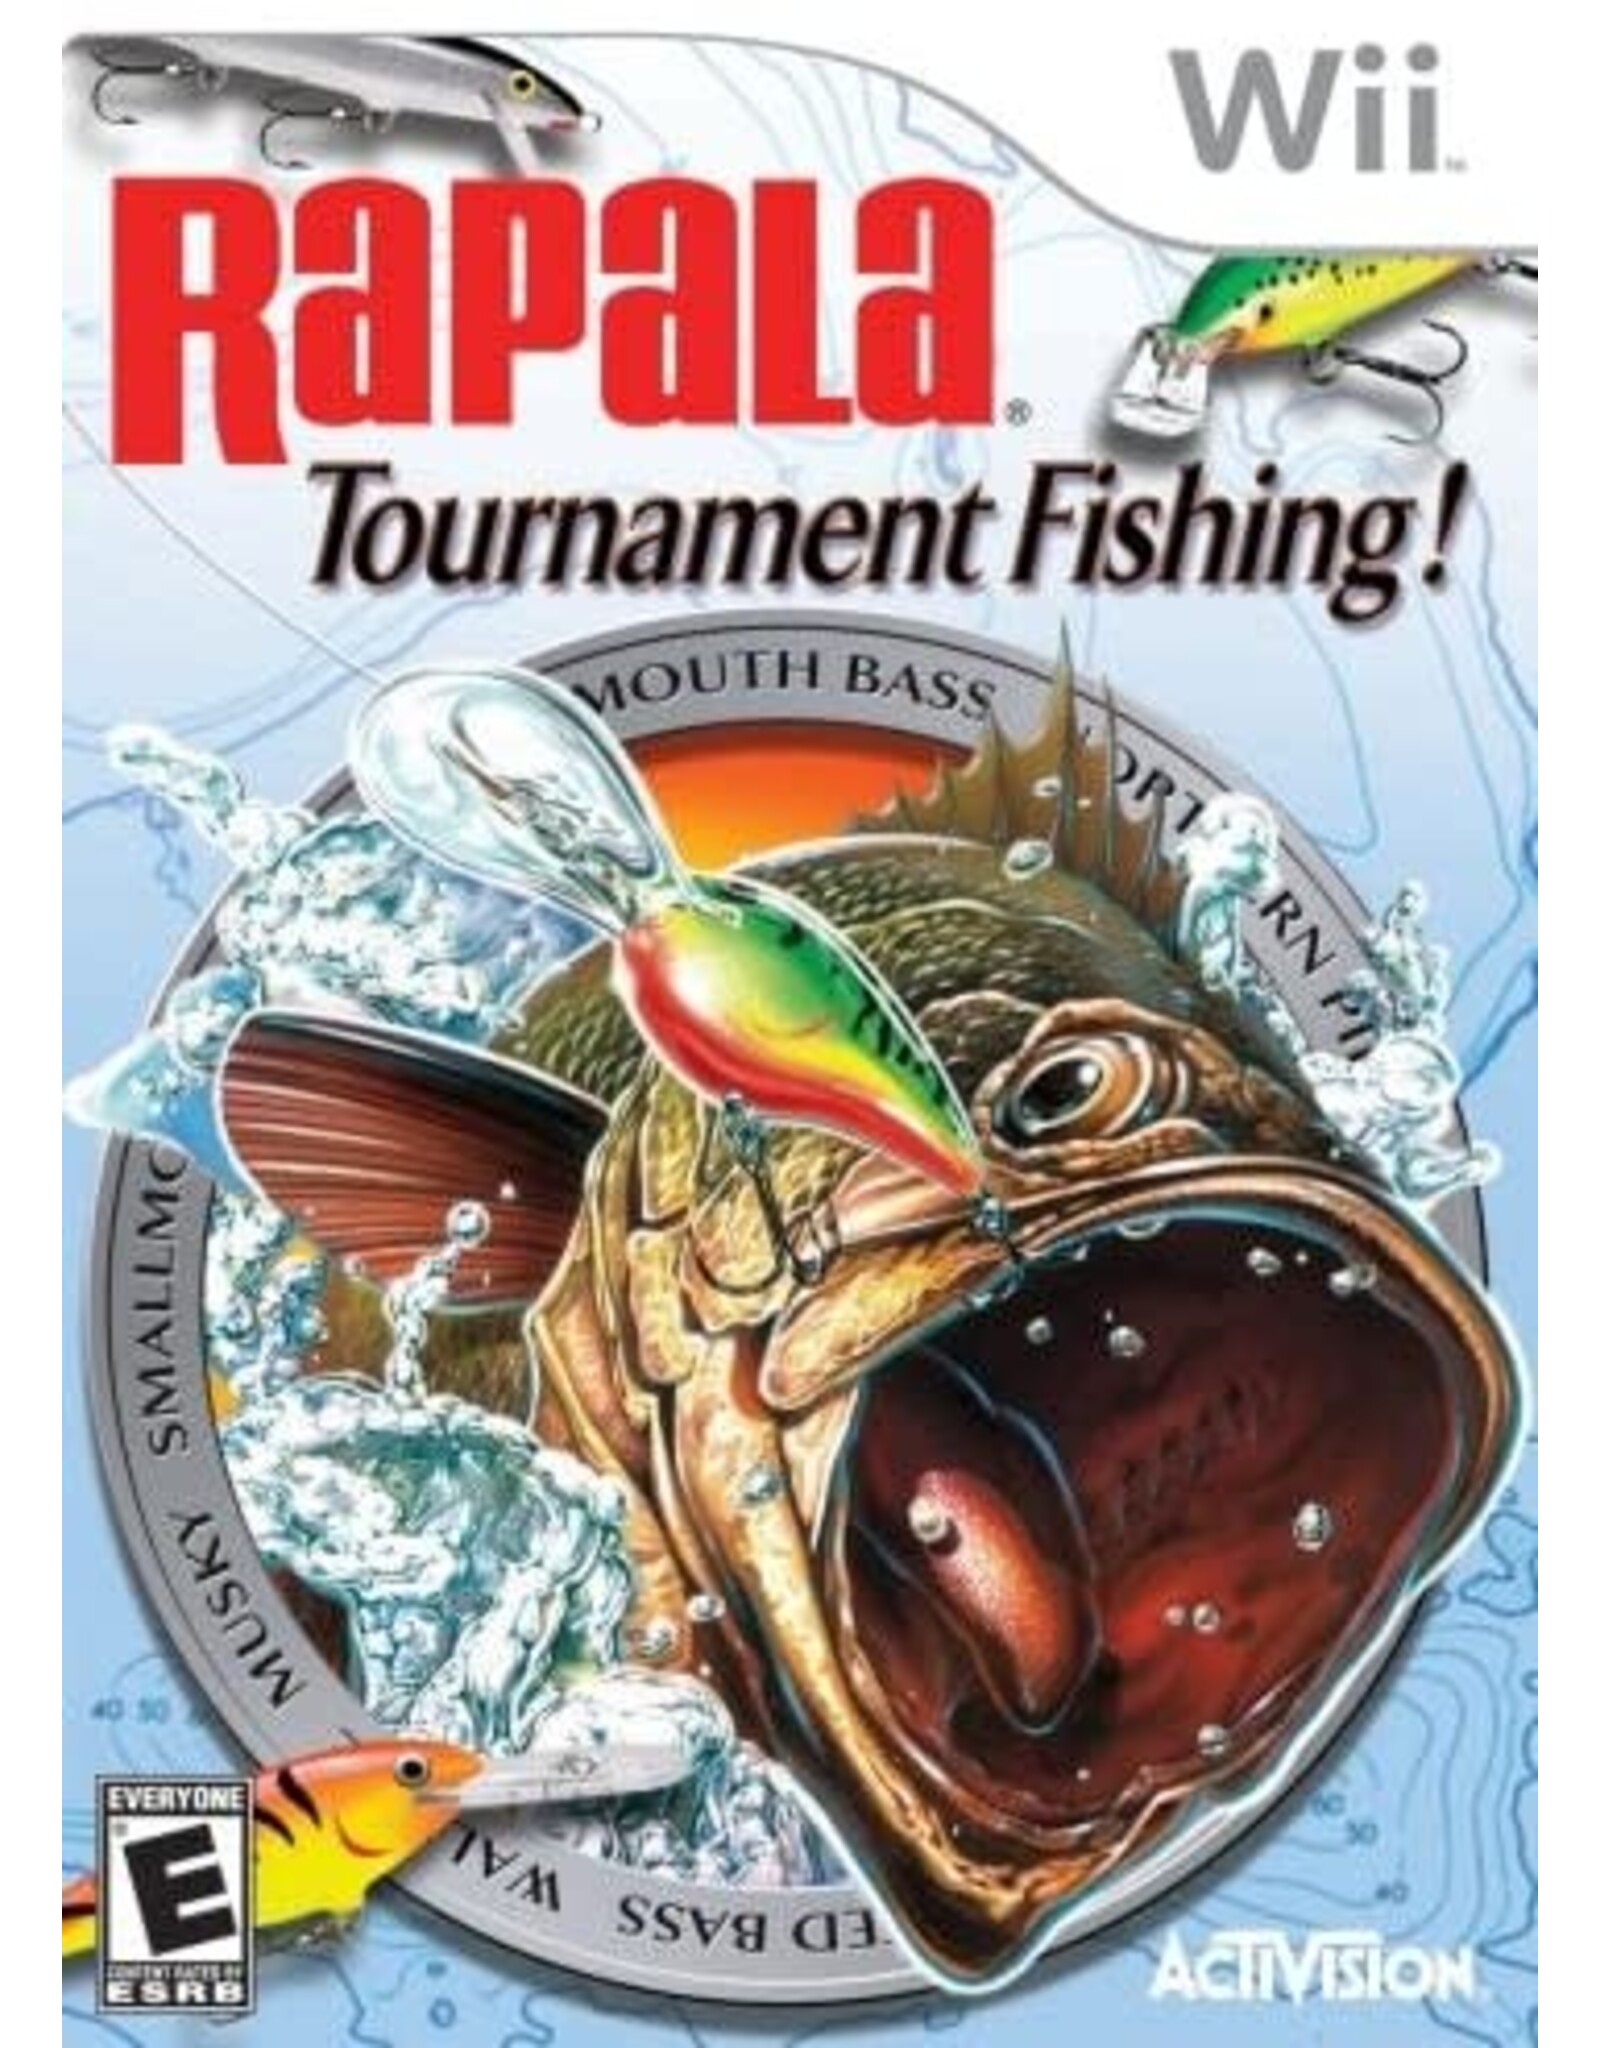 Wii Rapala Tournament Fishing (No Manual)